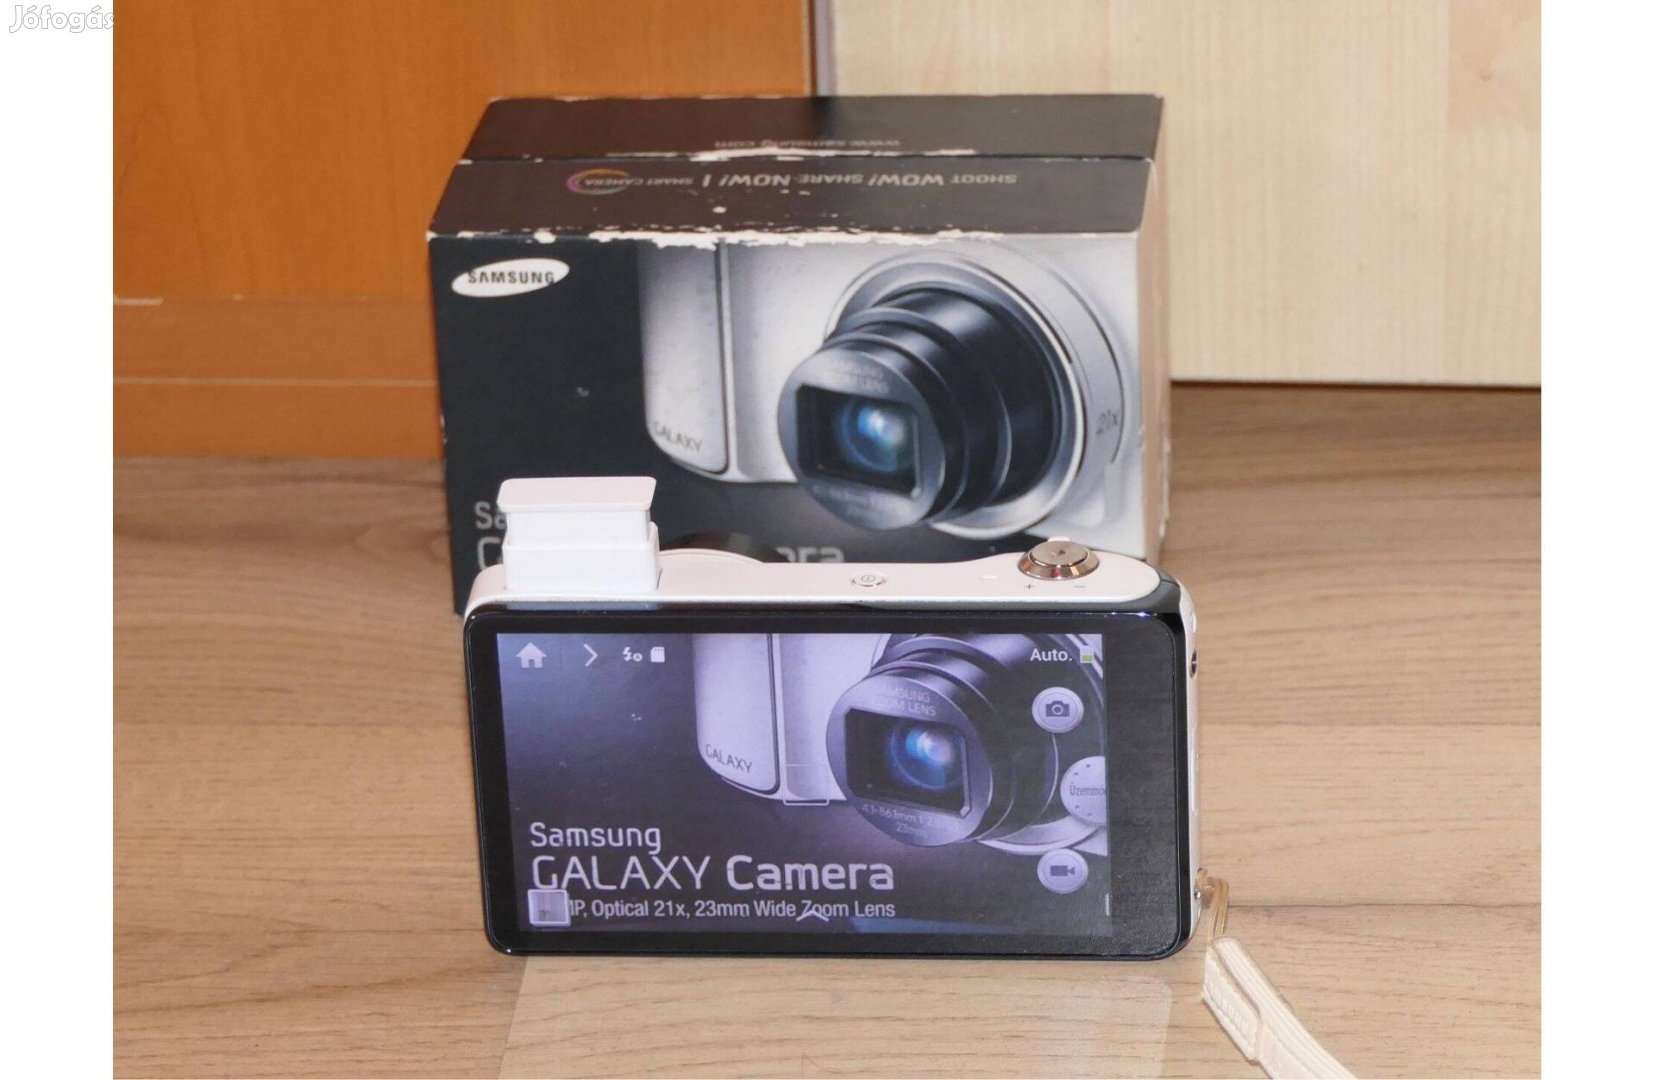 Samsung Galaxy GC100 Camera szim, 21 x zoom, 17 mpx új állapot